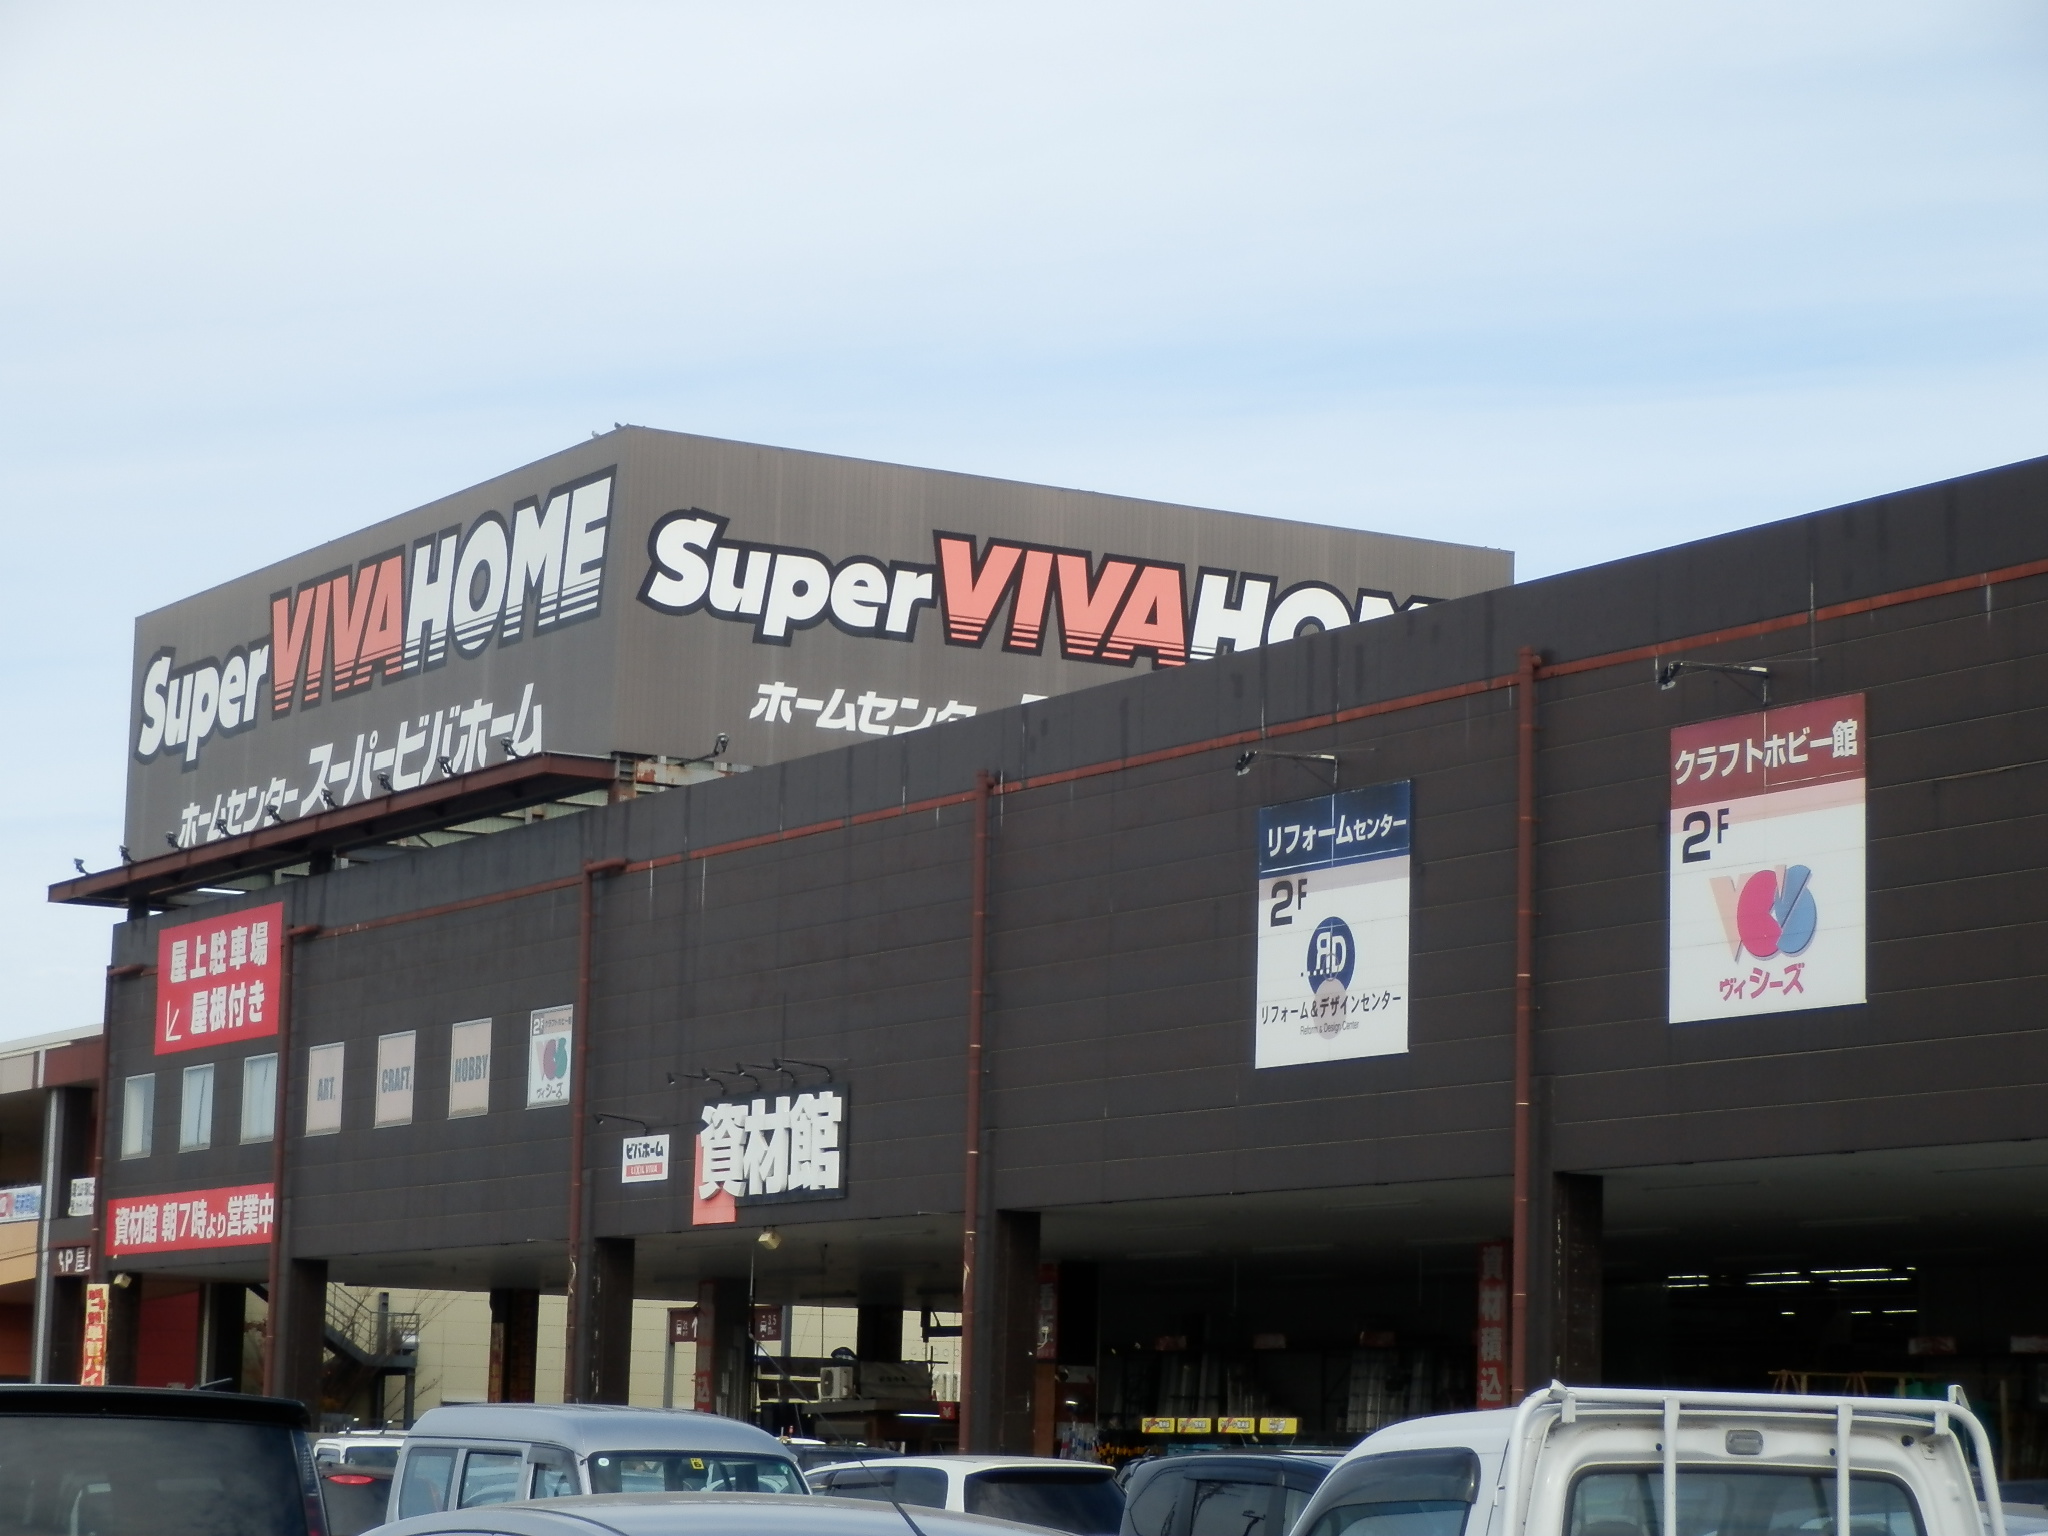 Home center. 250m until the Super Viva Home (home improvement)